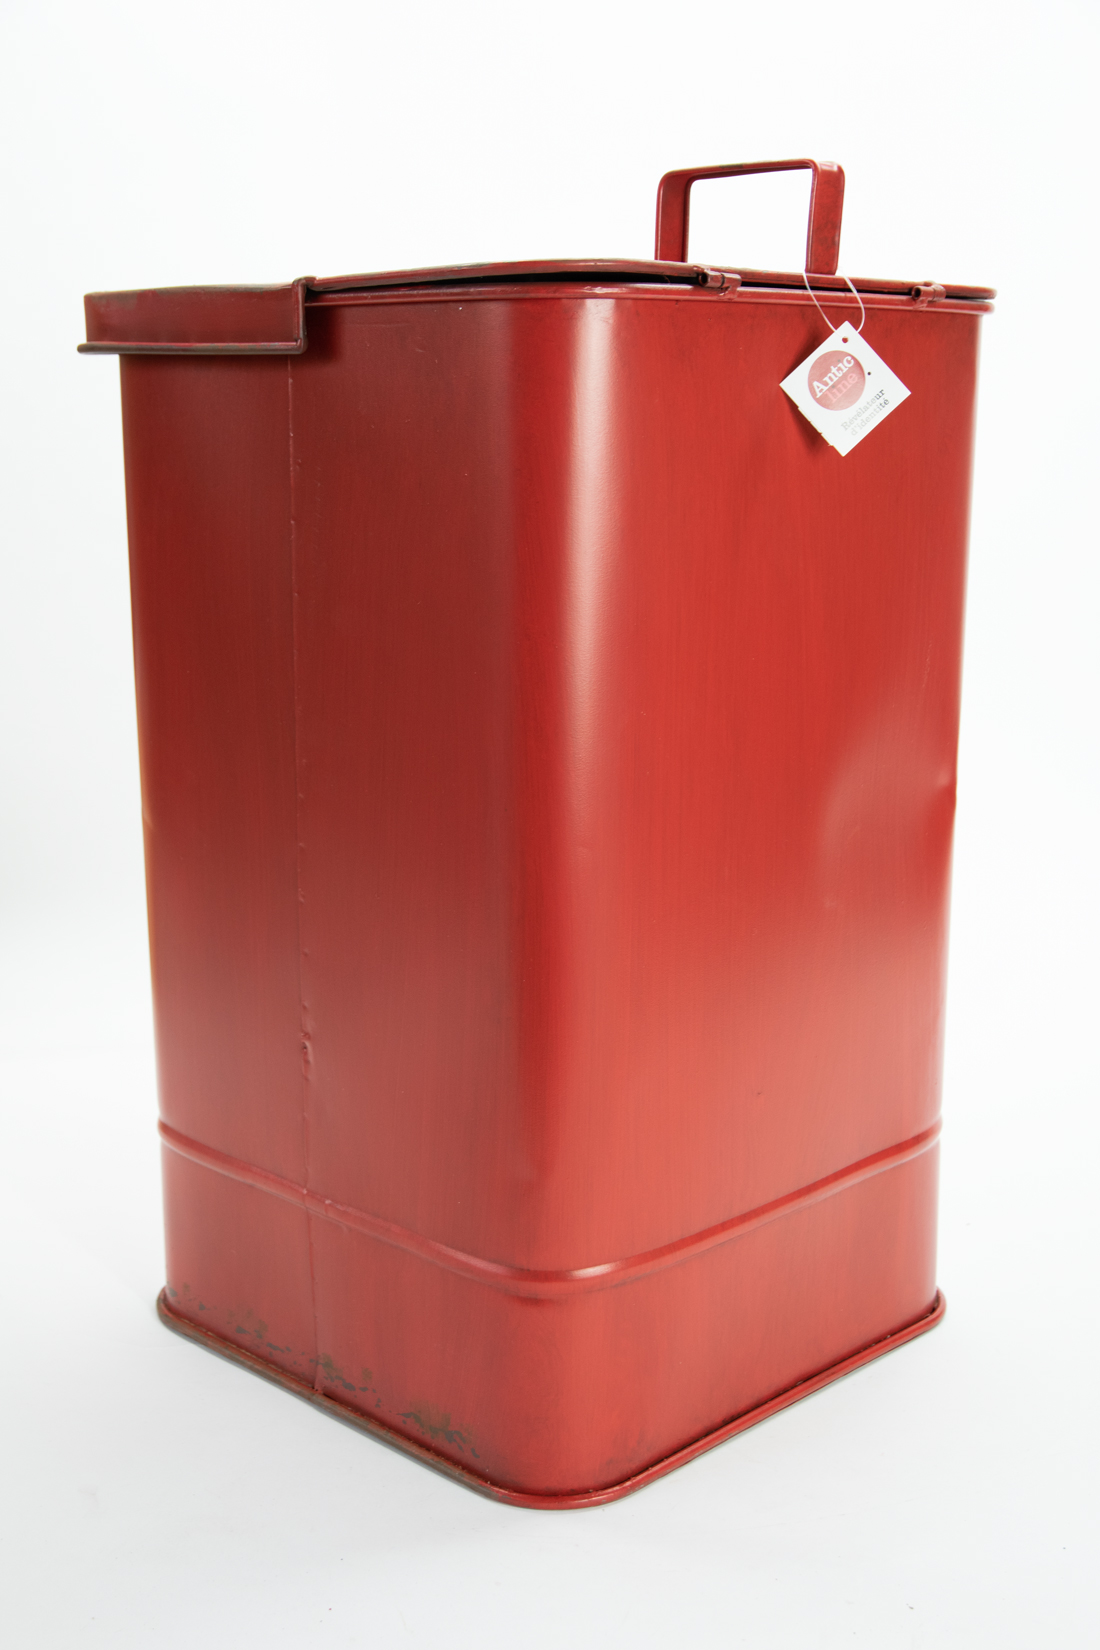 Abfallbehälter Set rot-B